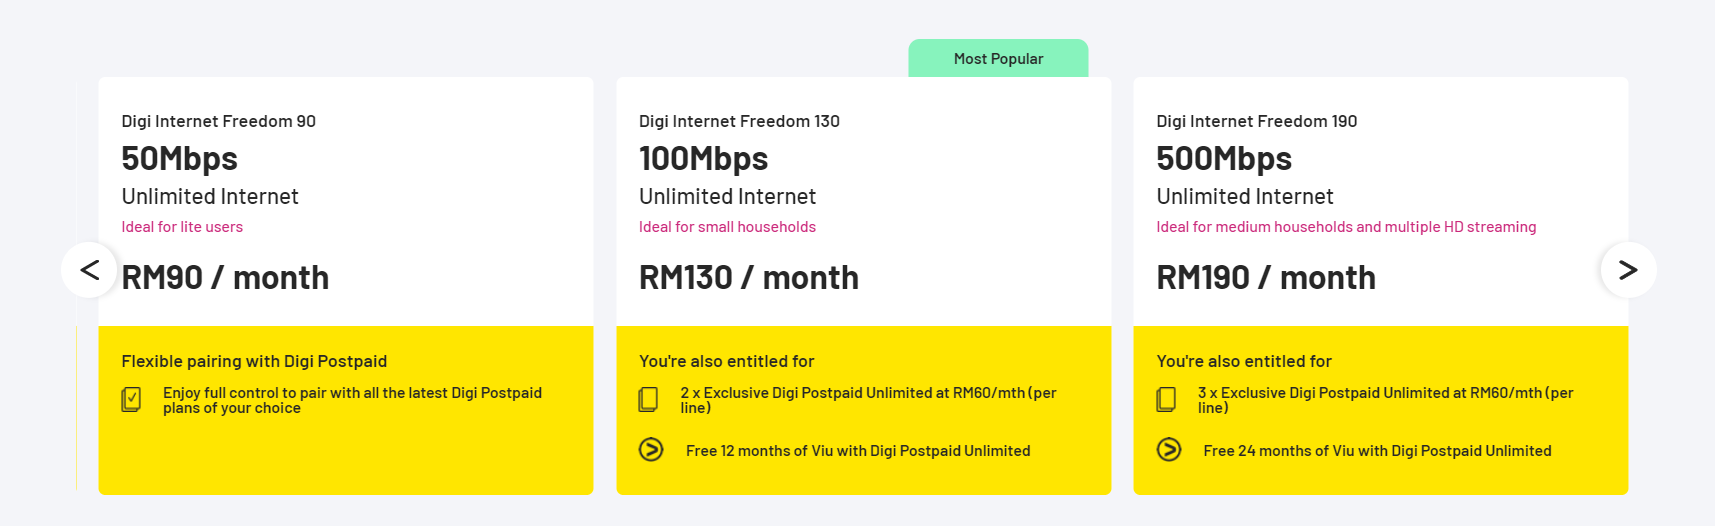 internetfreeedom